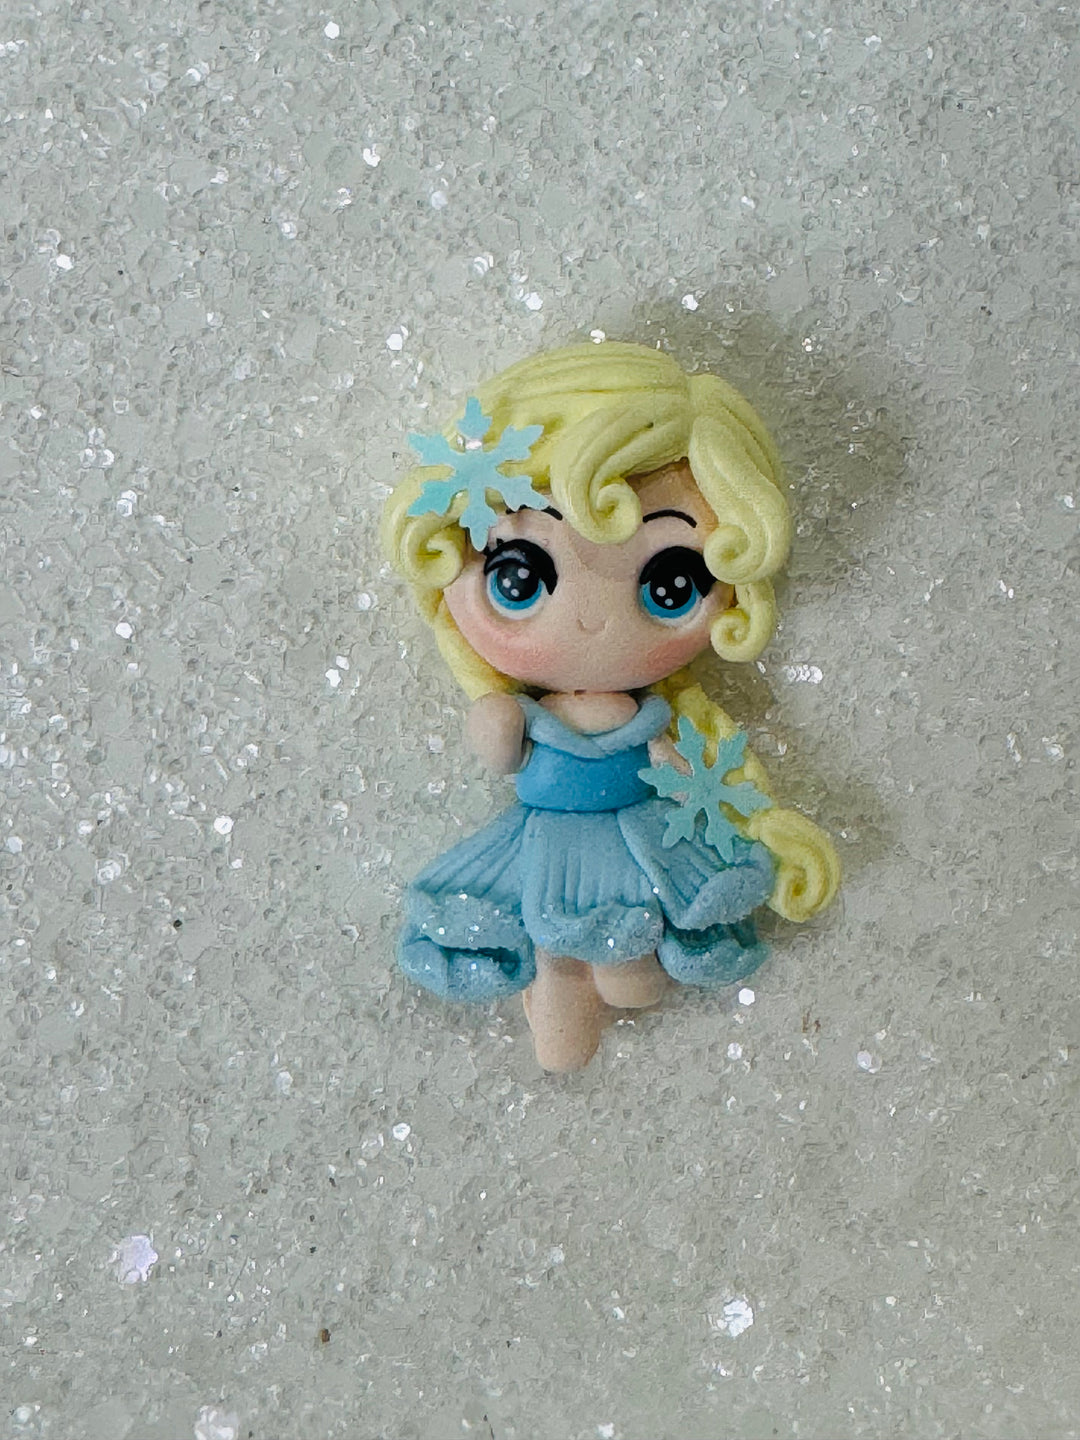 Snow Princess Clay from Temptress Maker